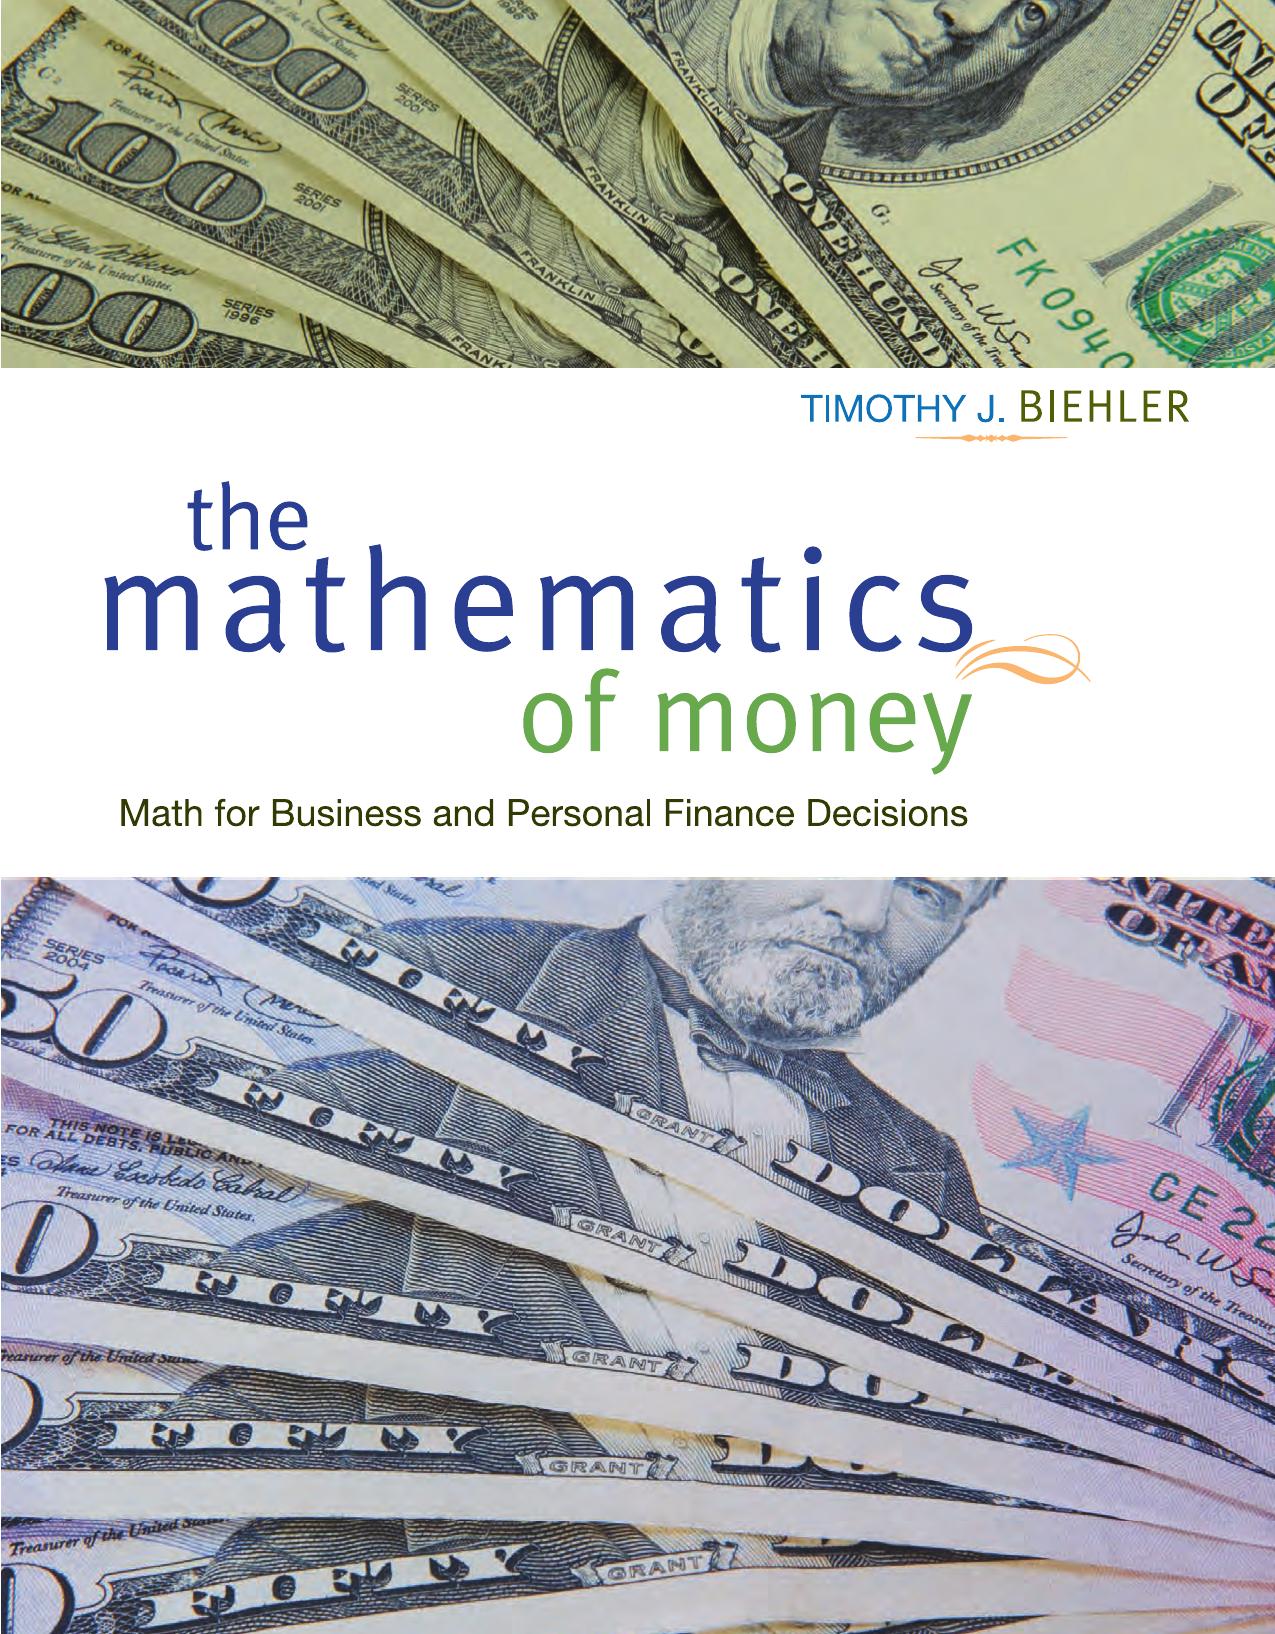 The Mathematics of Money